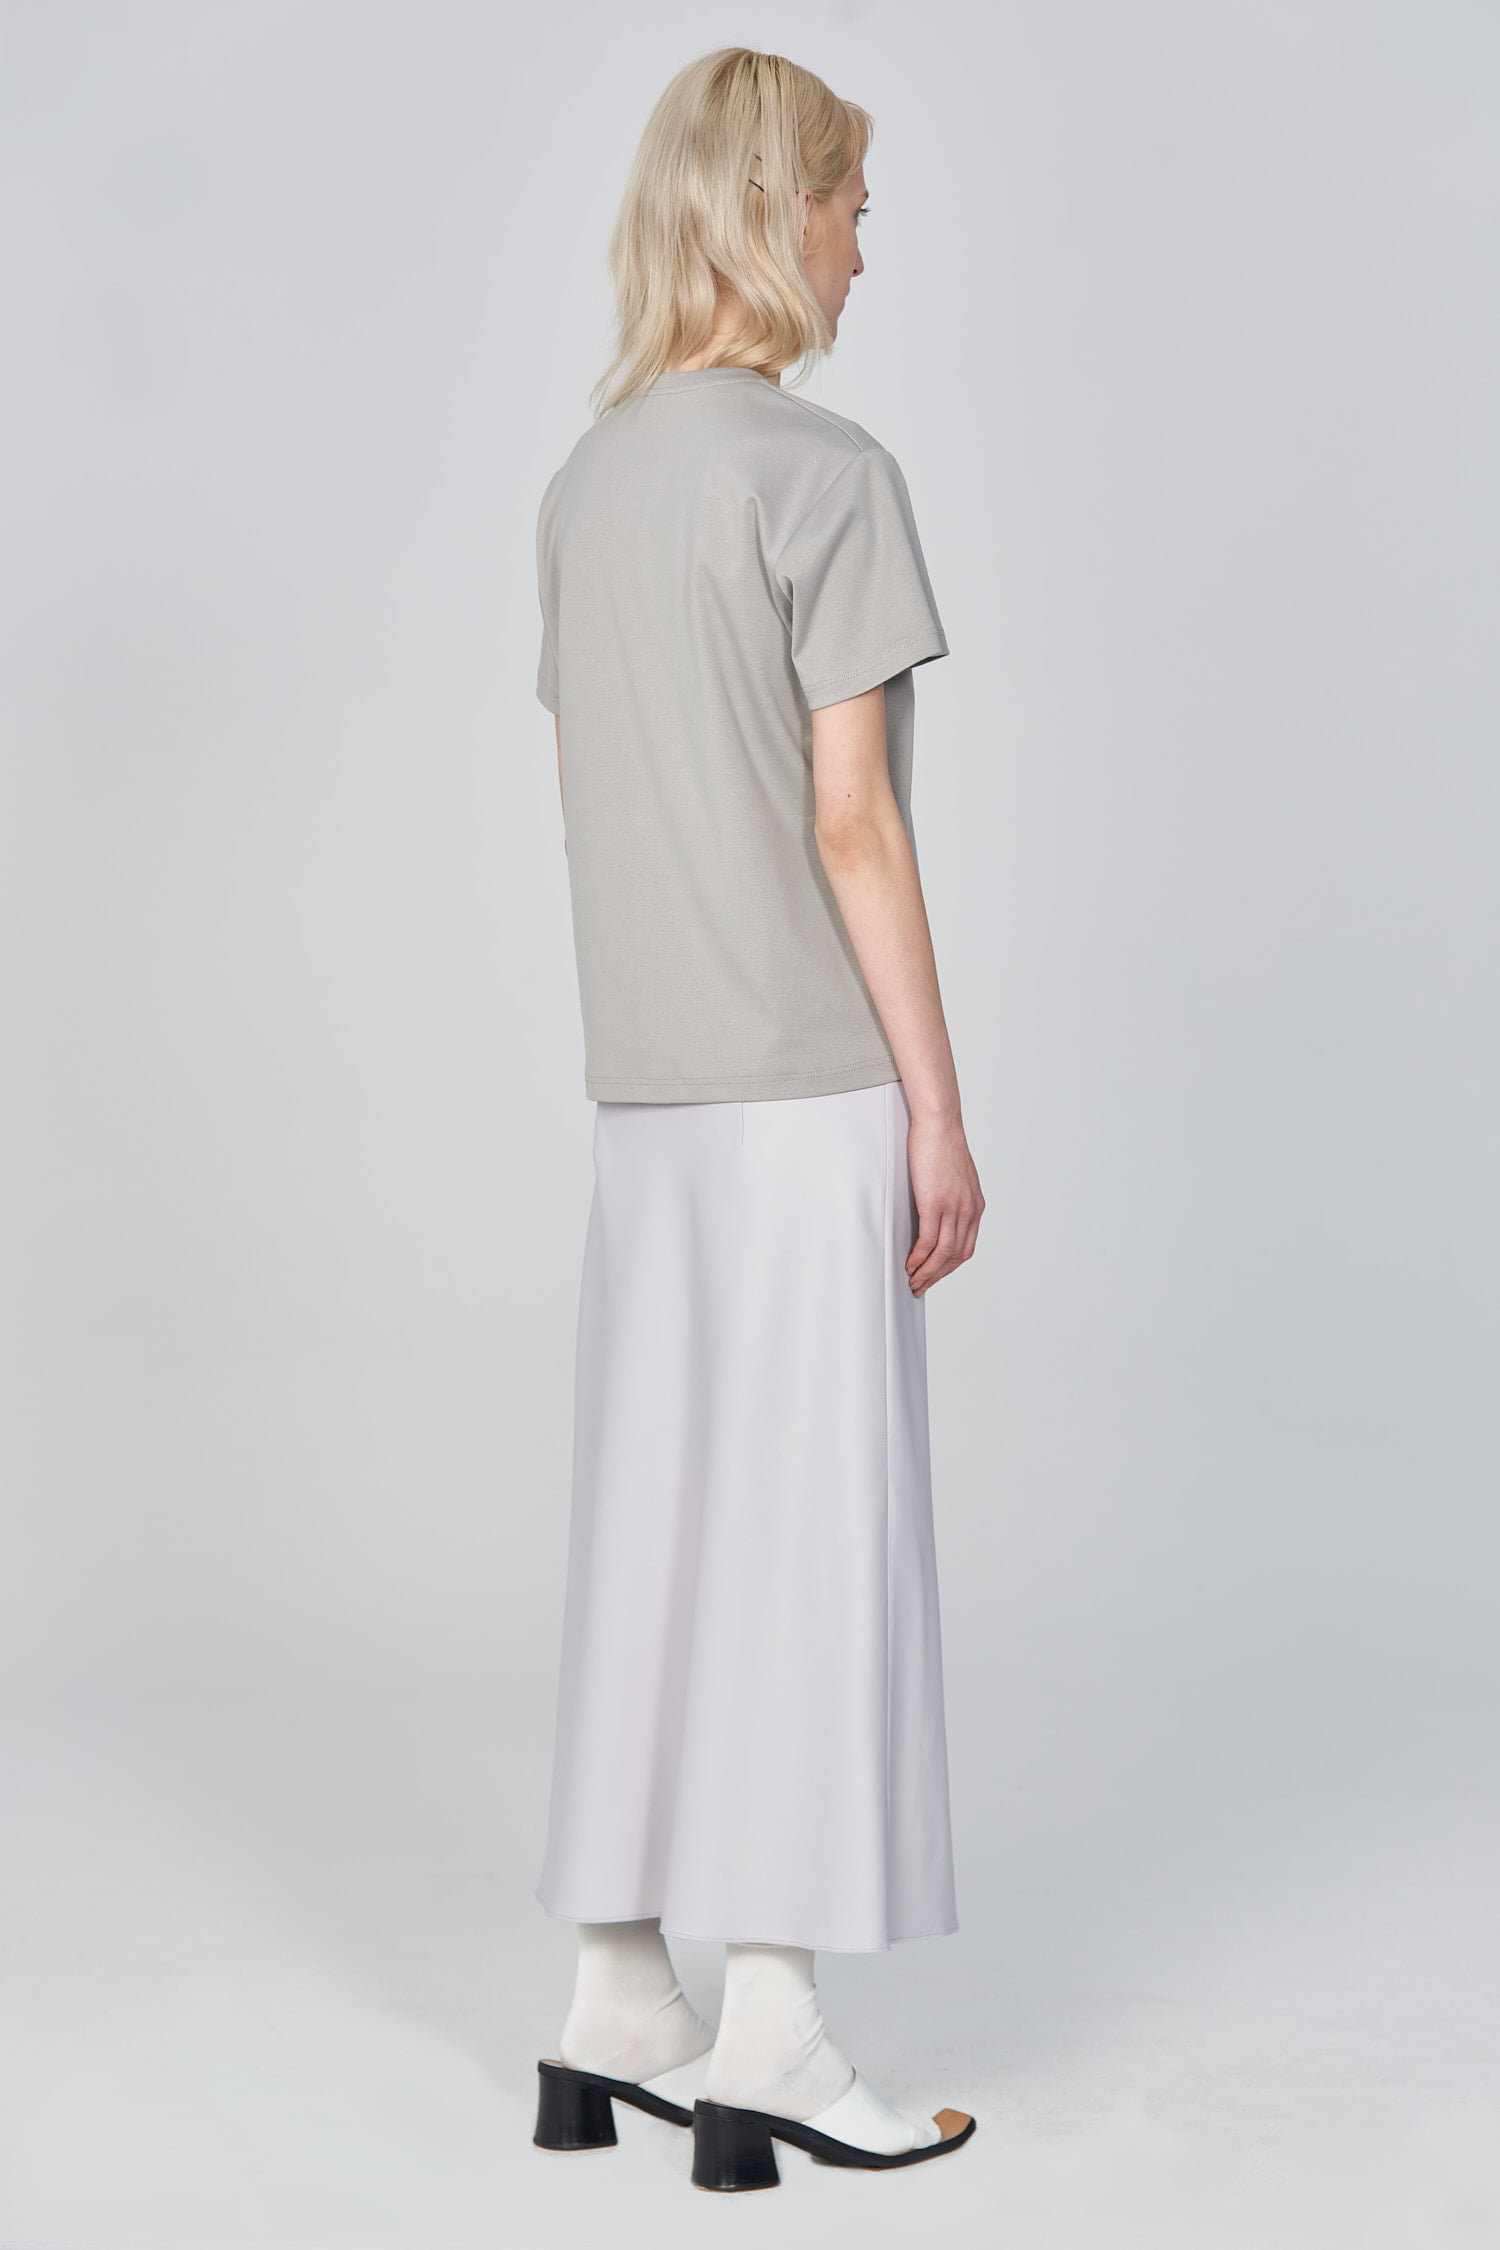 Acephala Ss21 Grey Logo T Shirt Silver Satin Skirt Sice Back